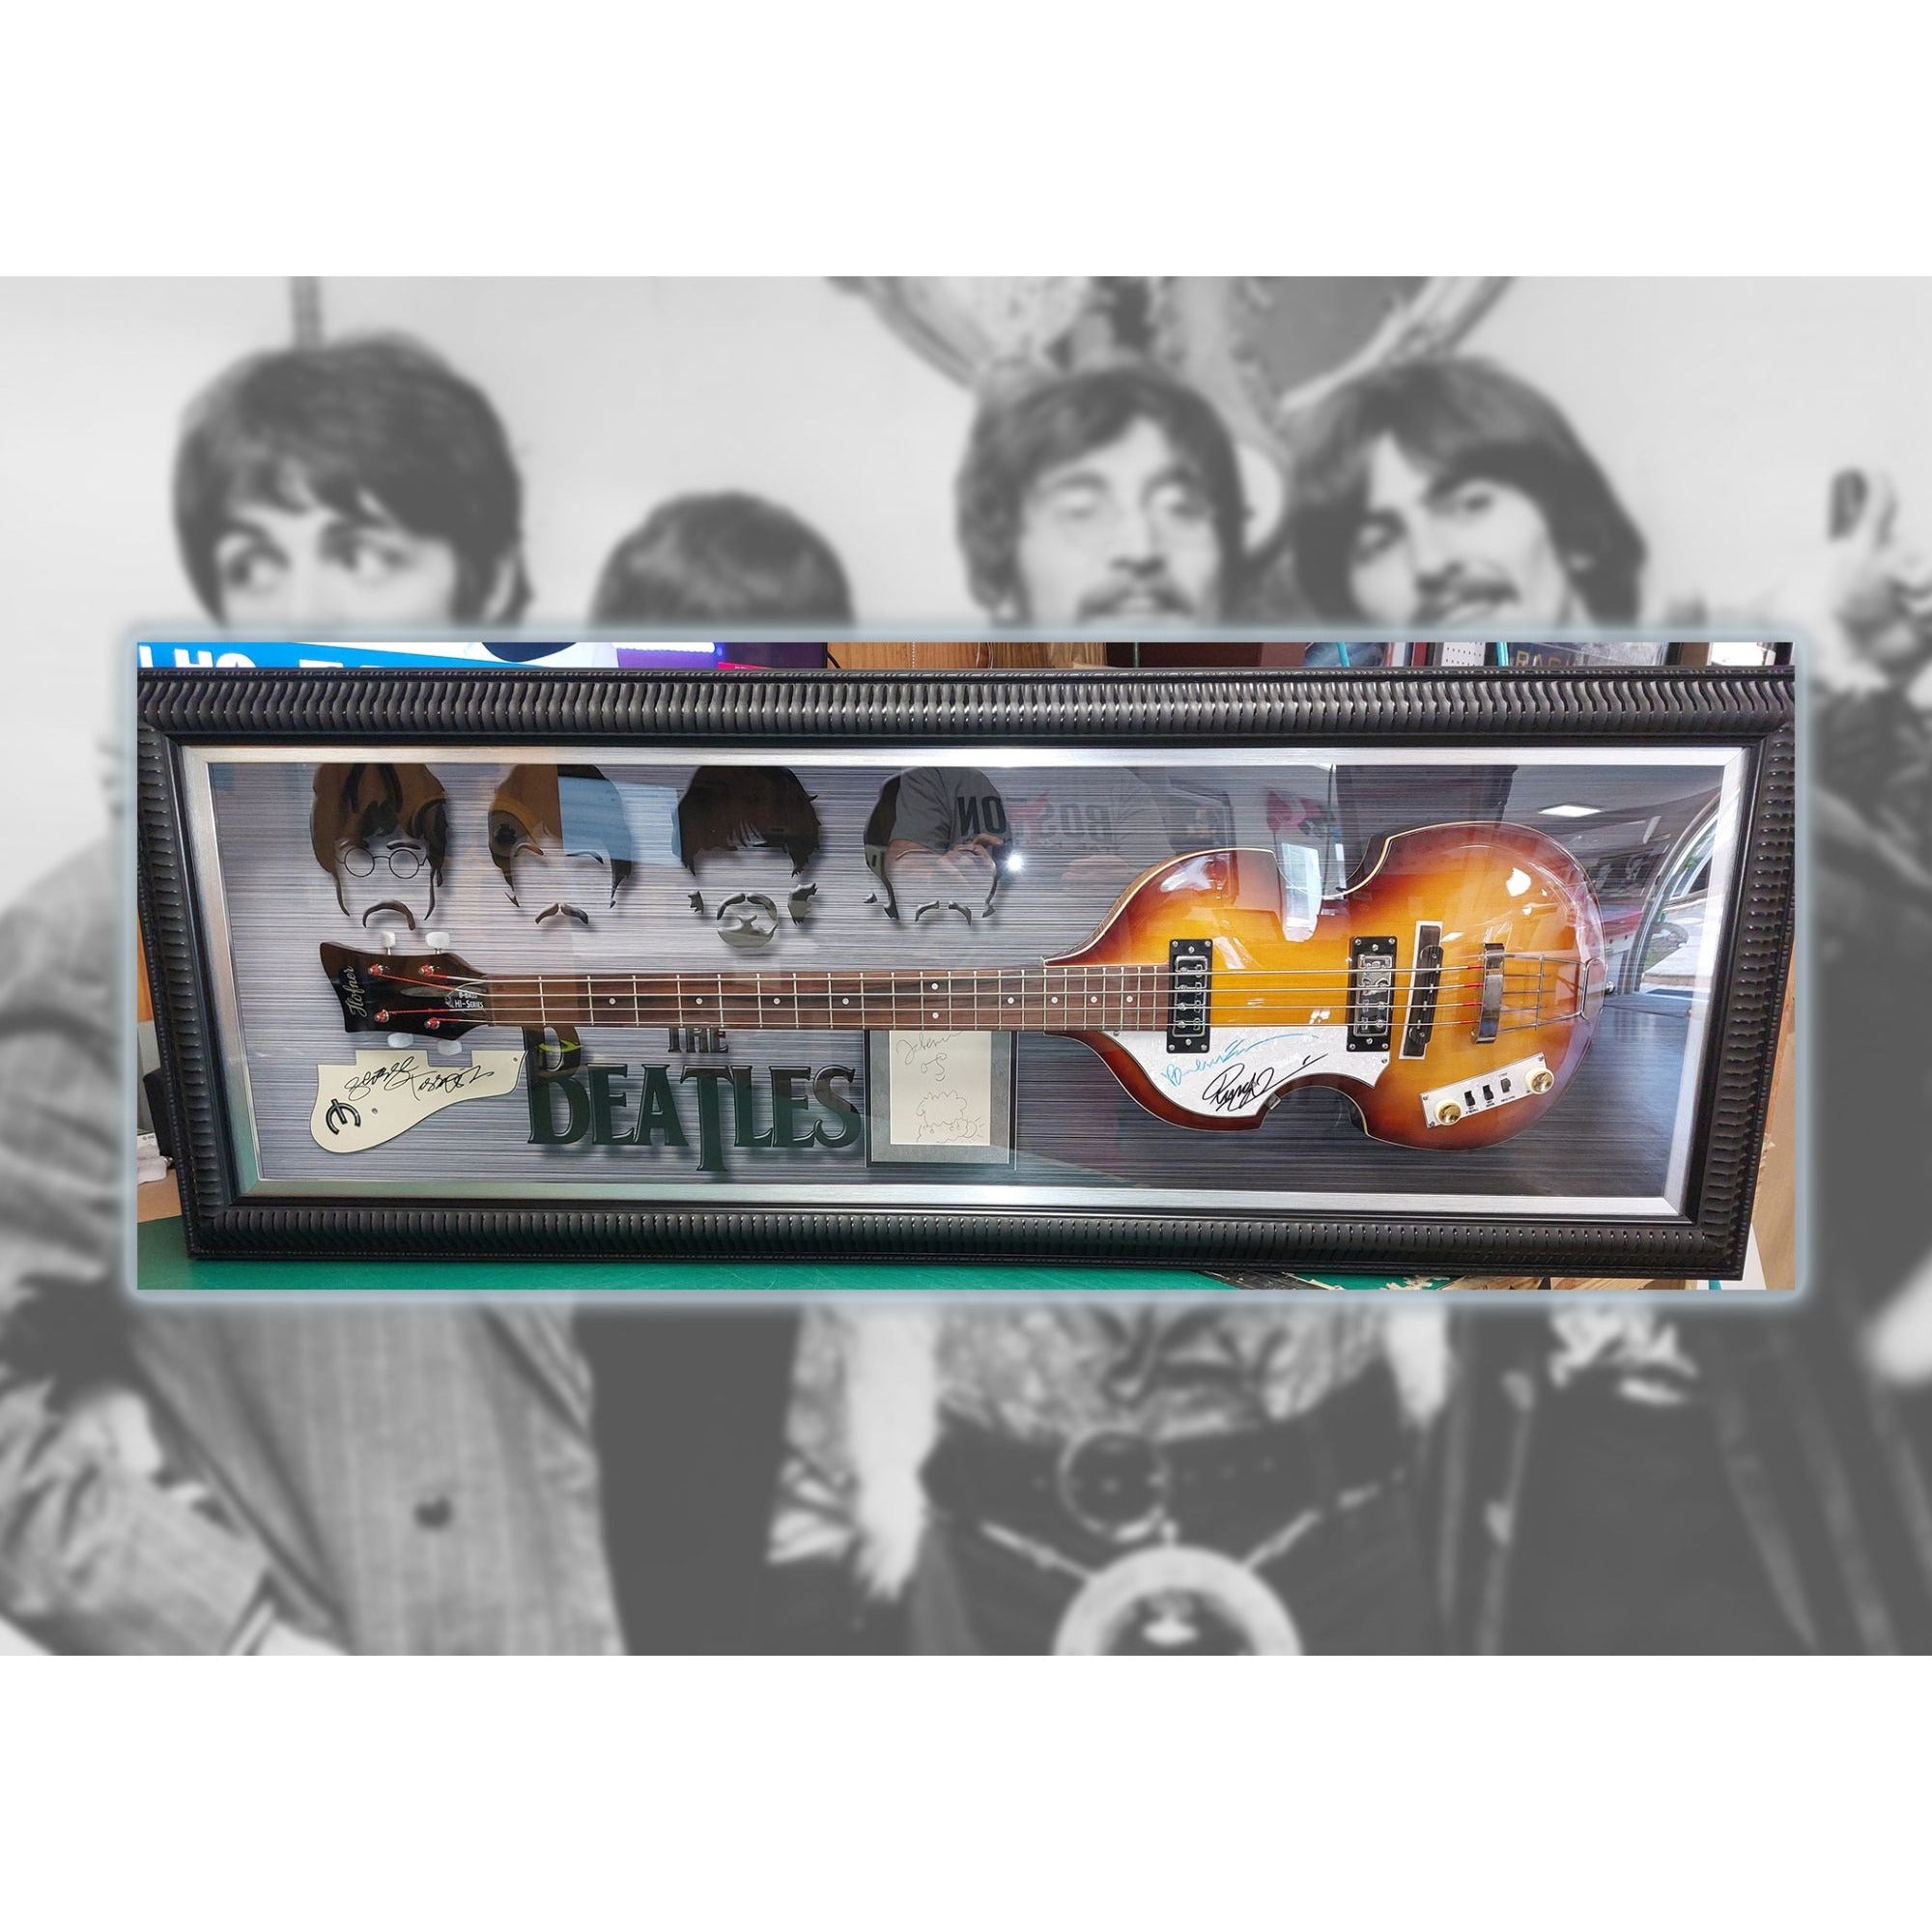 The Beatles Paul McCartney John Lennon George Harrison Ringo Starr signed and framed 20x53 guitar with proof